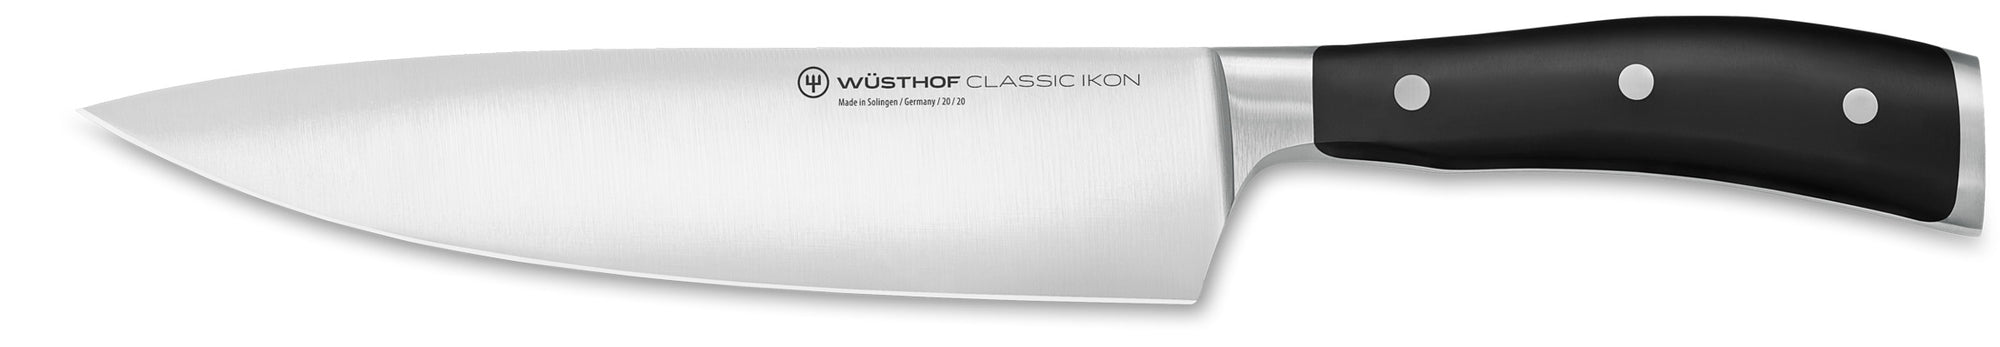 Wusthof Classic IKON chef knife 4596-20 Canada